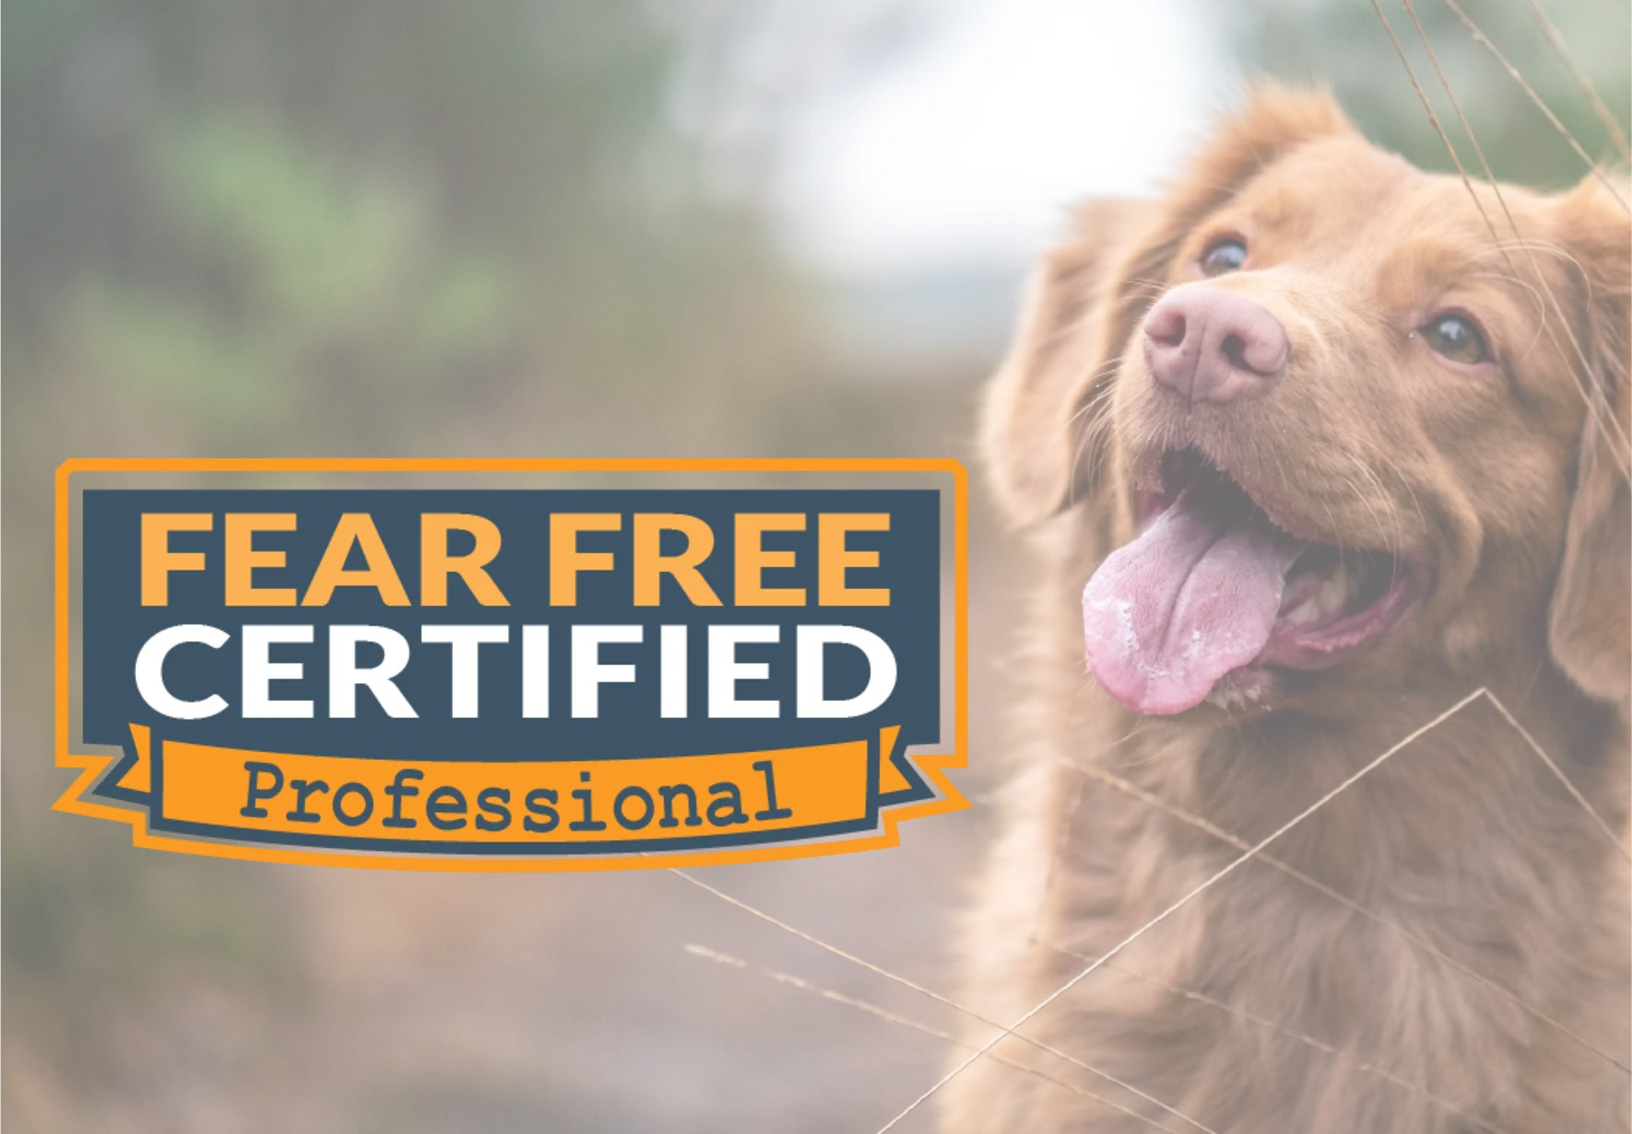 Fear free logo with dog